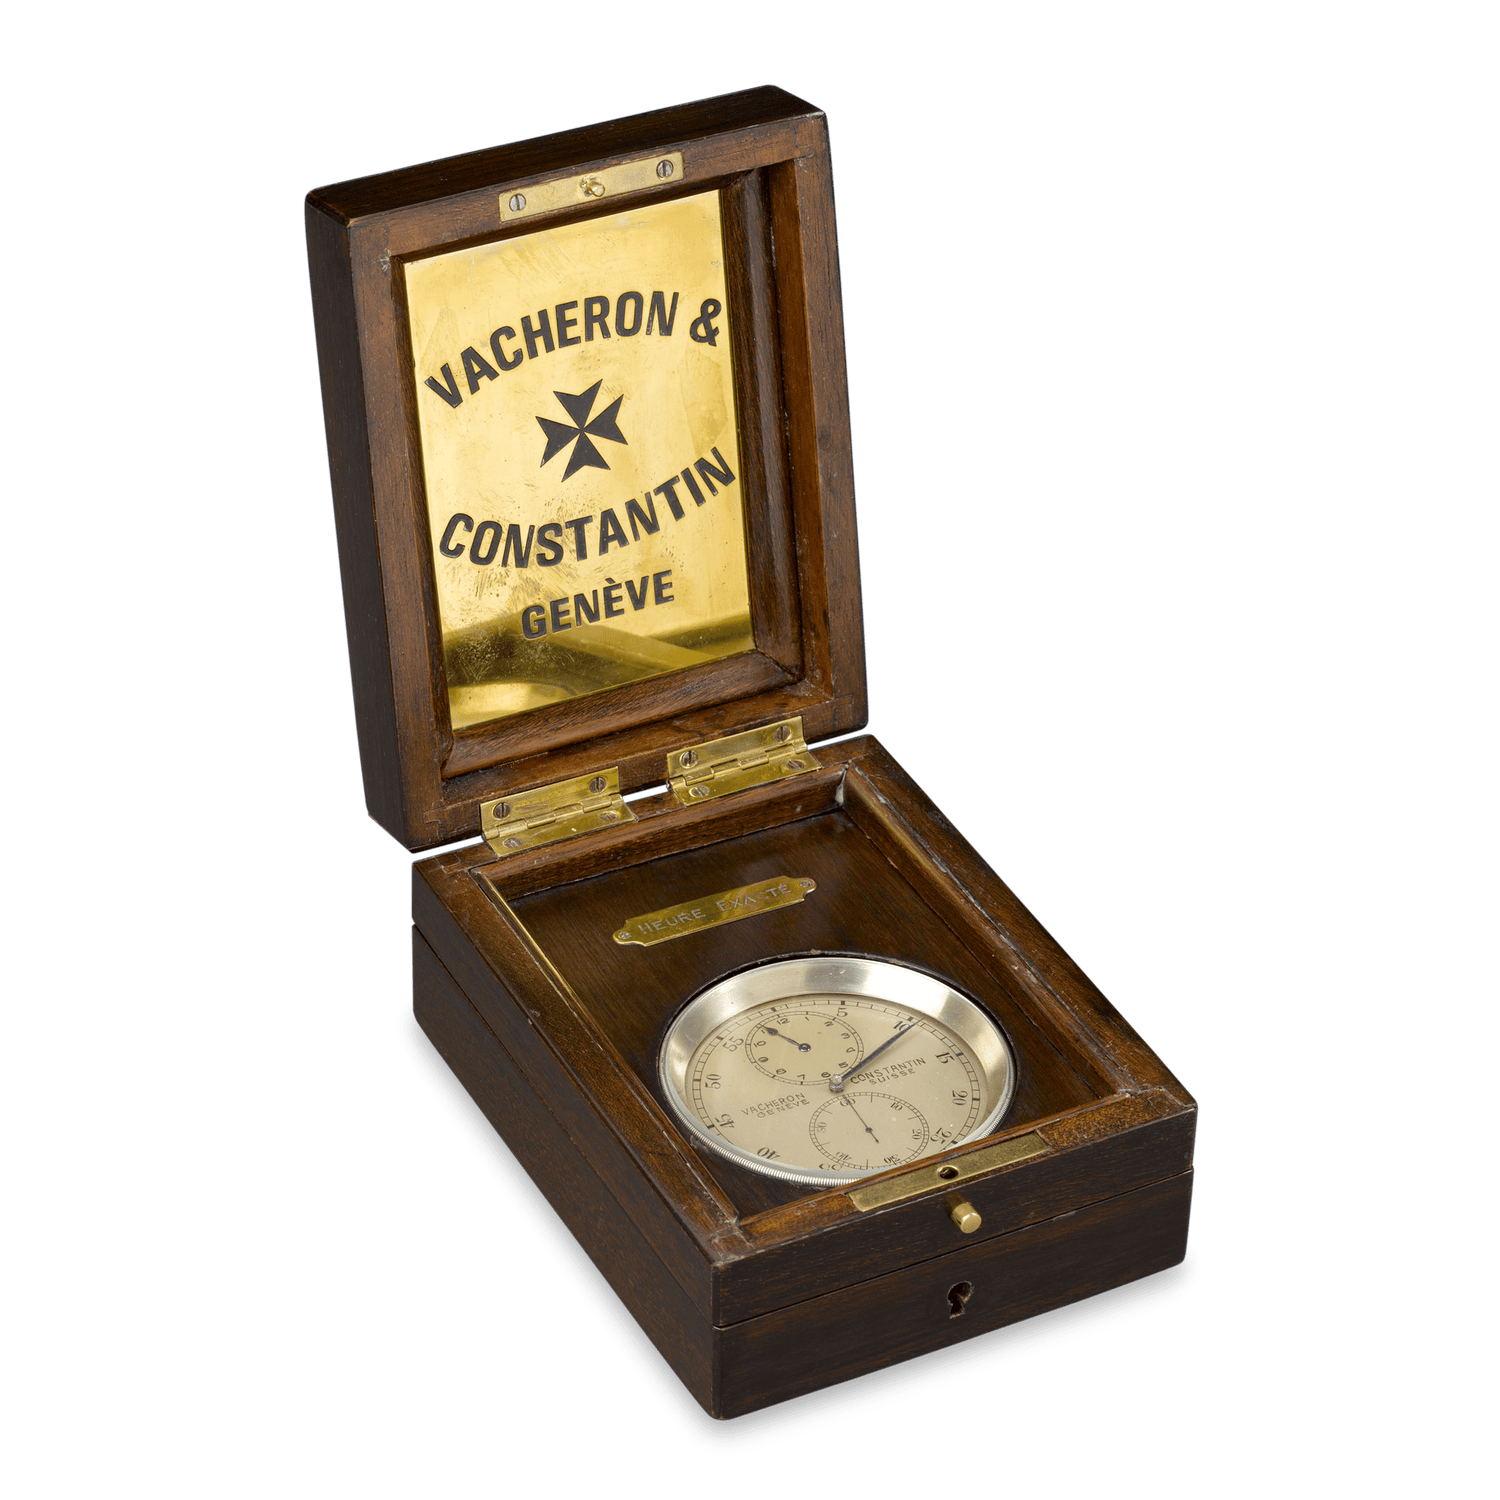 Vacheron Constantin Chronometer